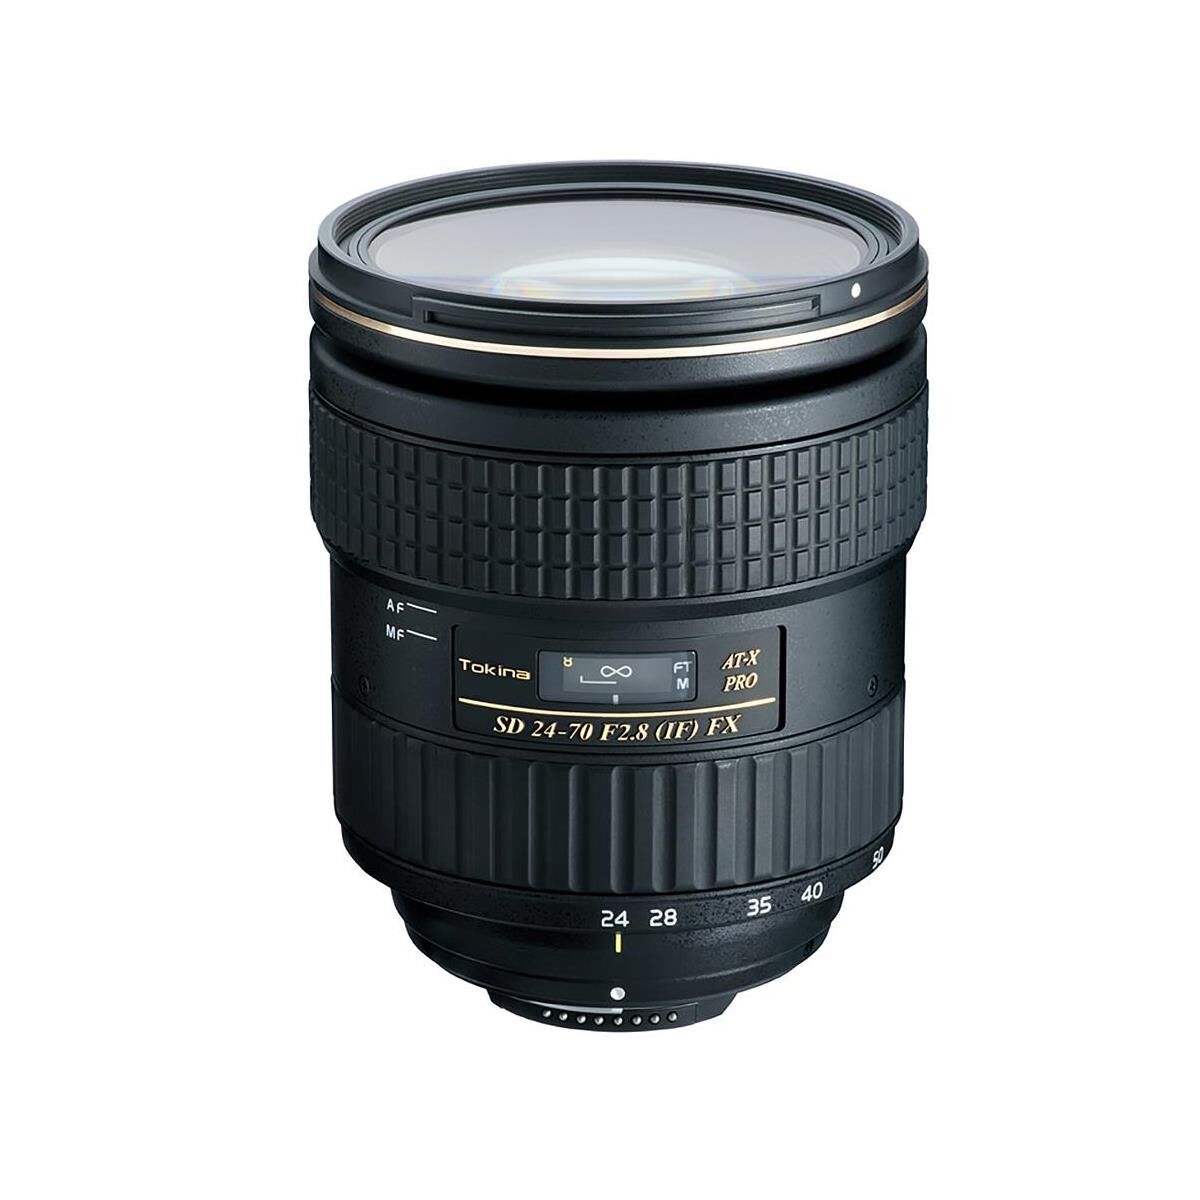 Tokina 24-70mm F/2.8 AT-X Pro FX Lens for Nikon Digital SLR Cameras